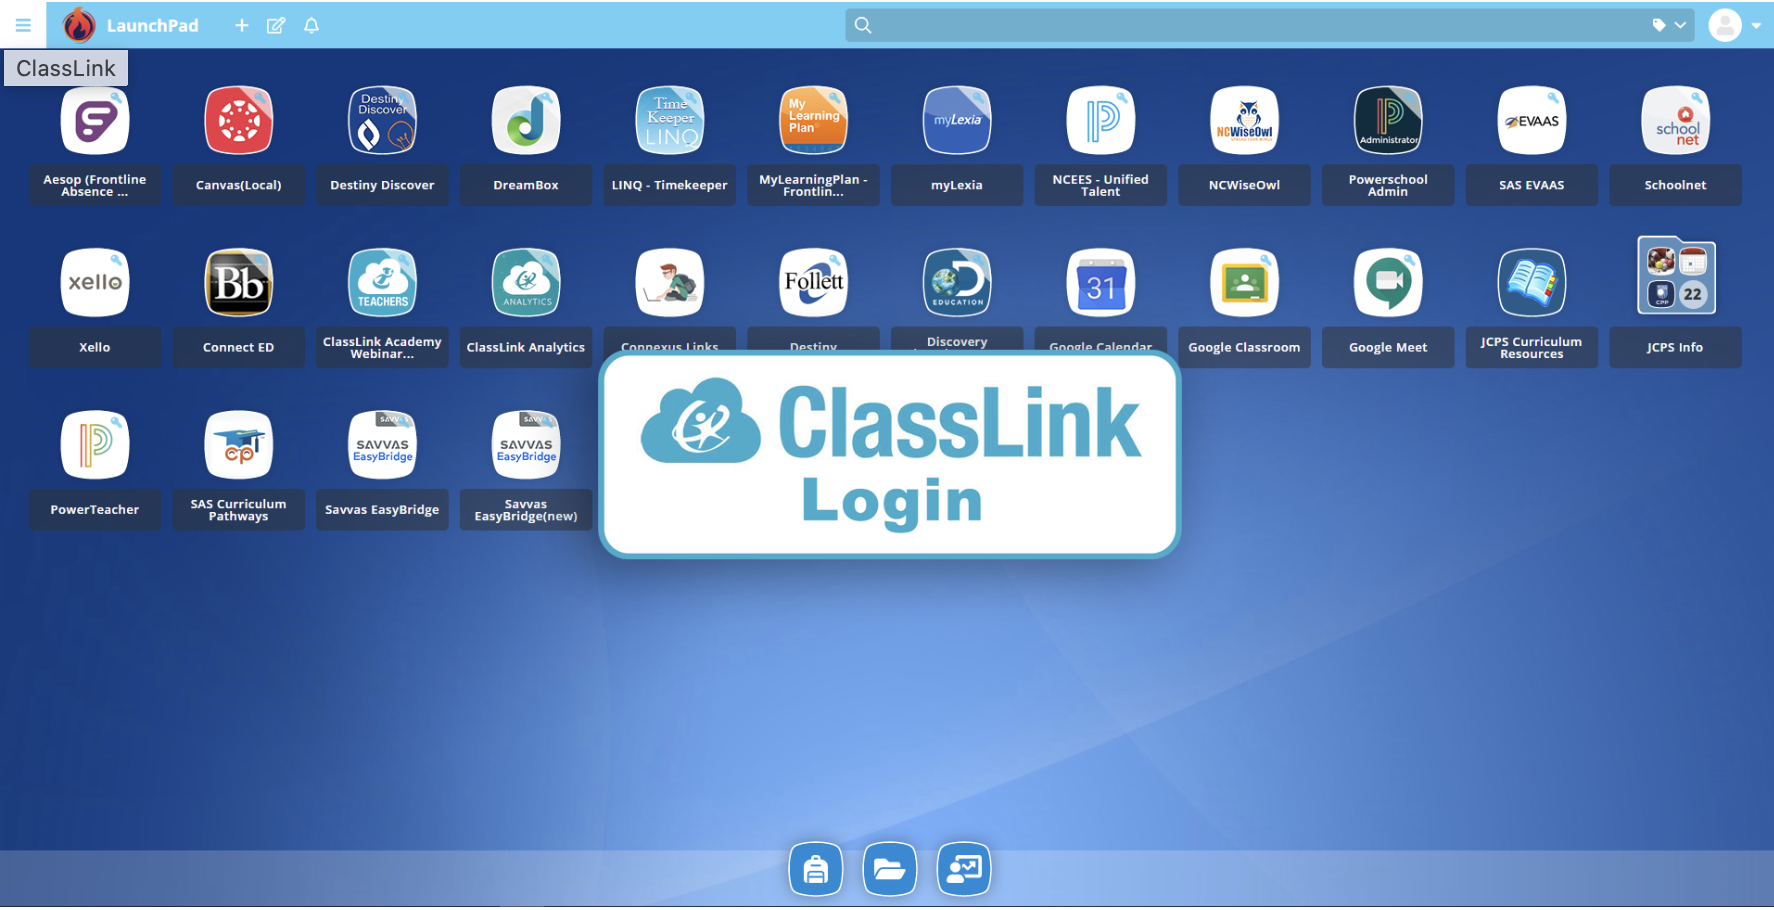 ClassLink Homepage